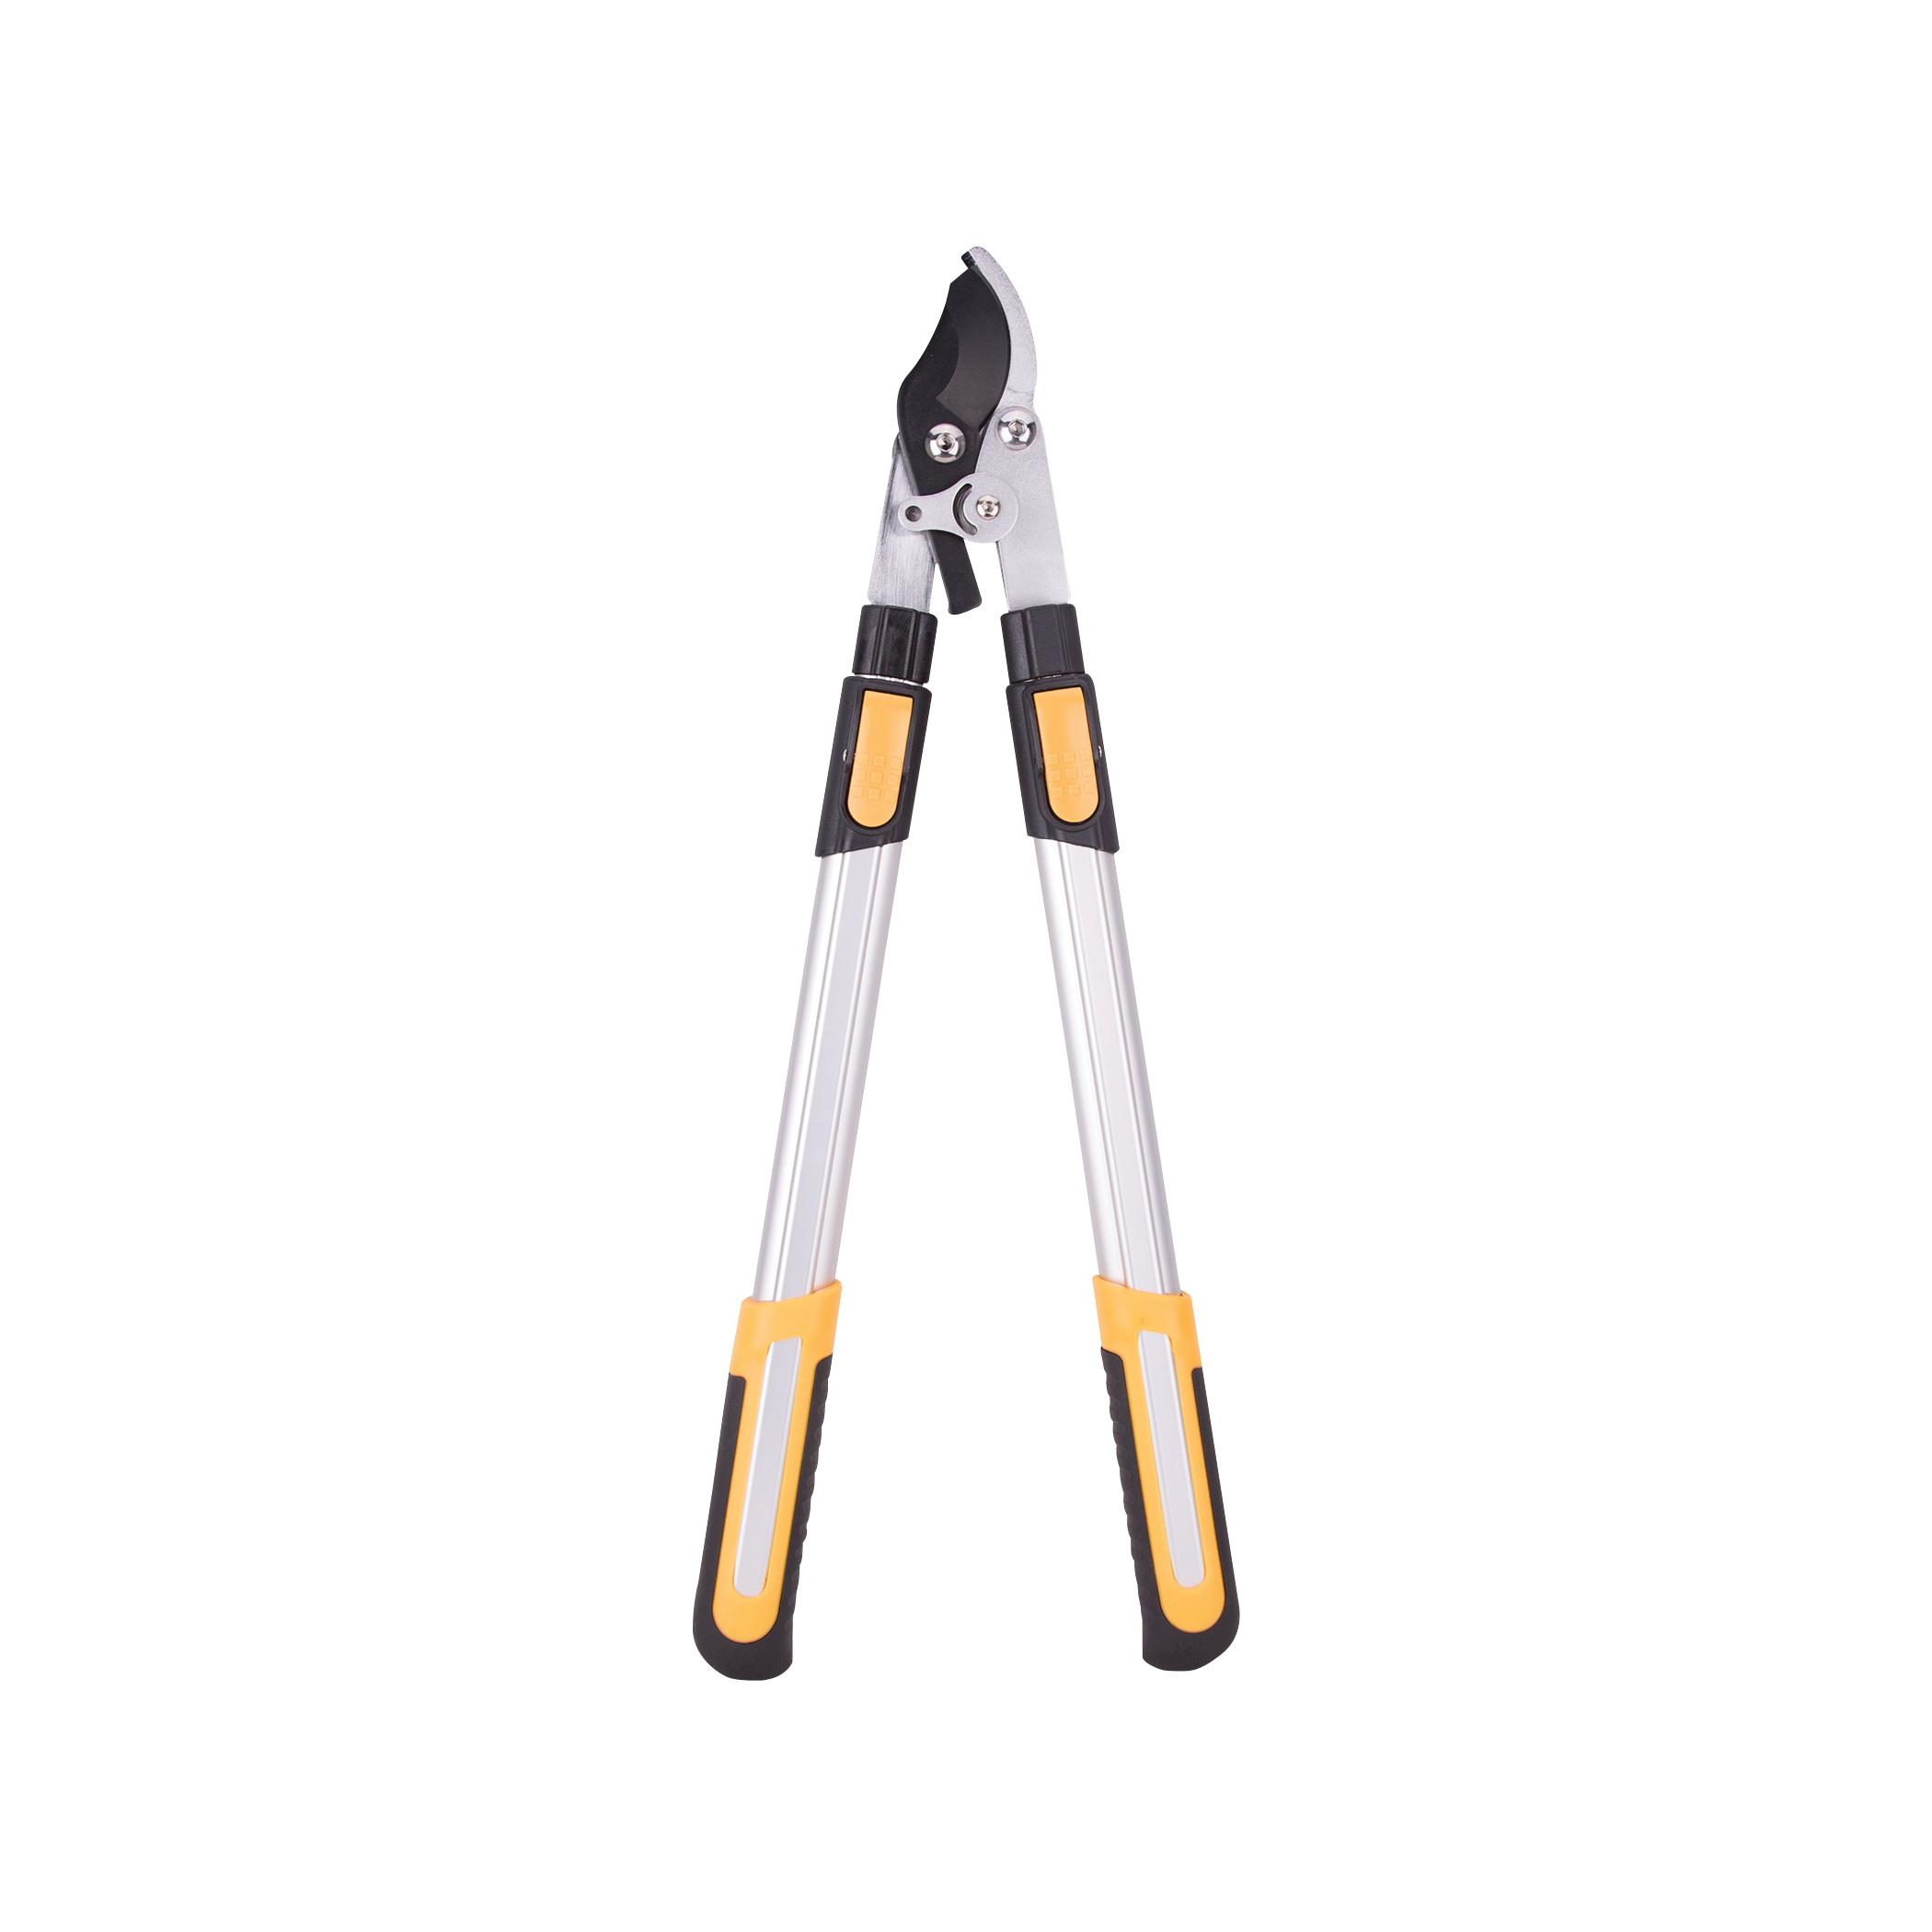 GL73126 Lopper, 1-1/4 in Cutting Capacity, Steel Blade, Aluminum Handle, Cushion grip Handle